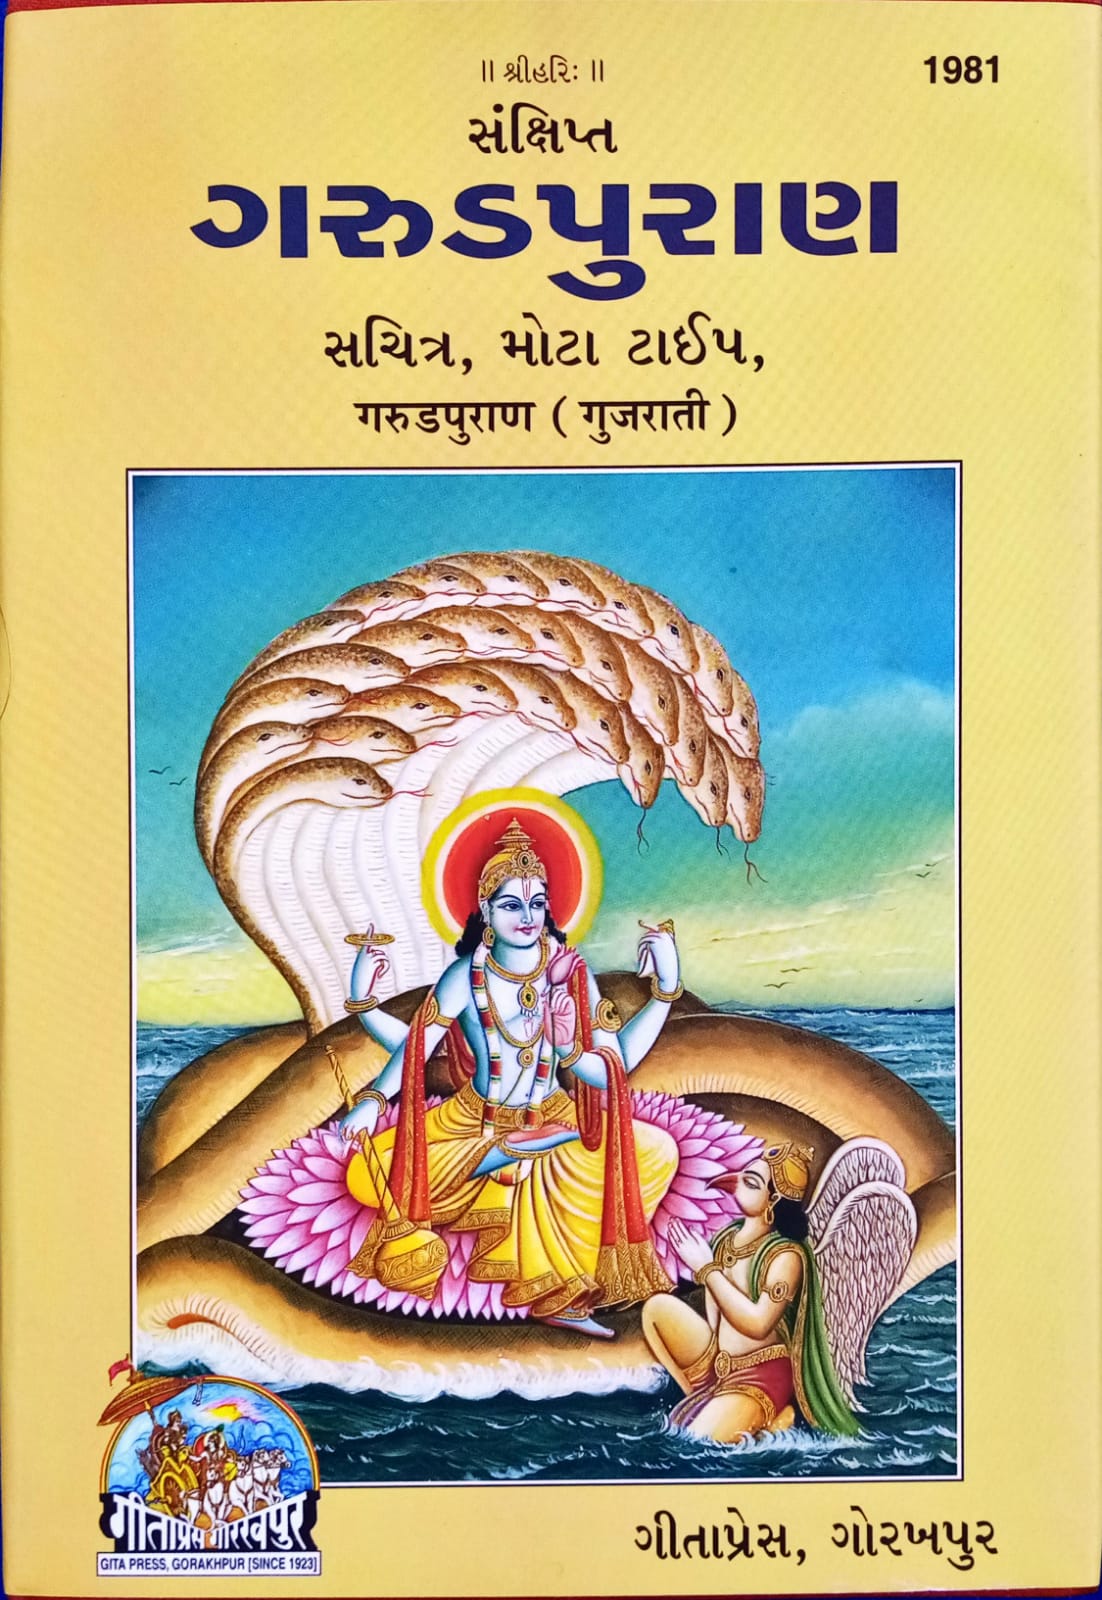 GarudaPuran - Gujarati